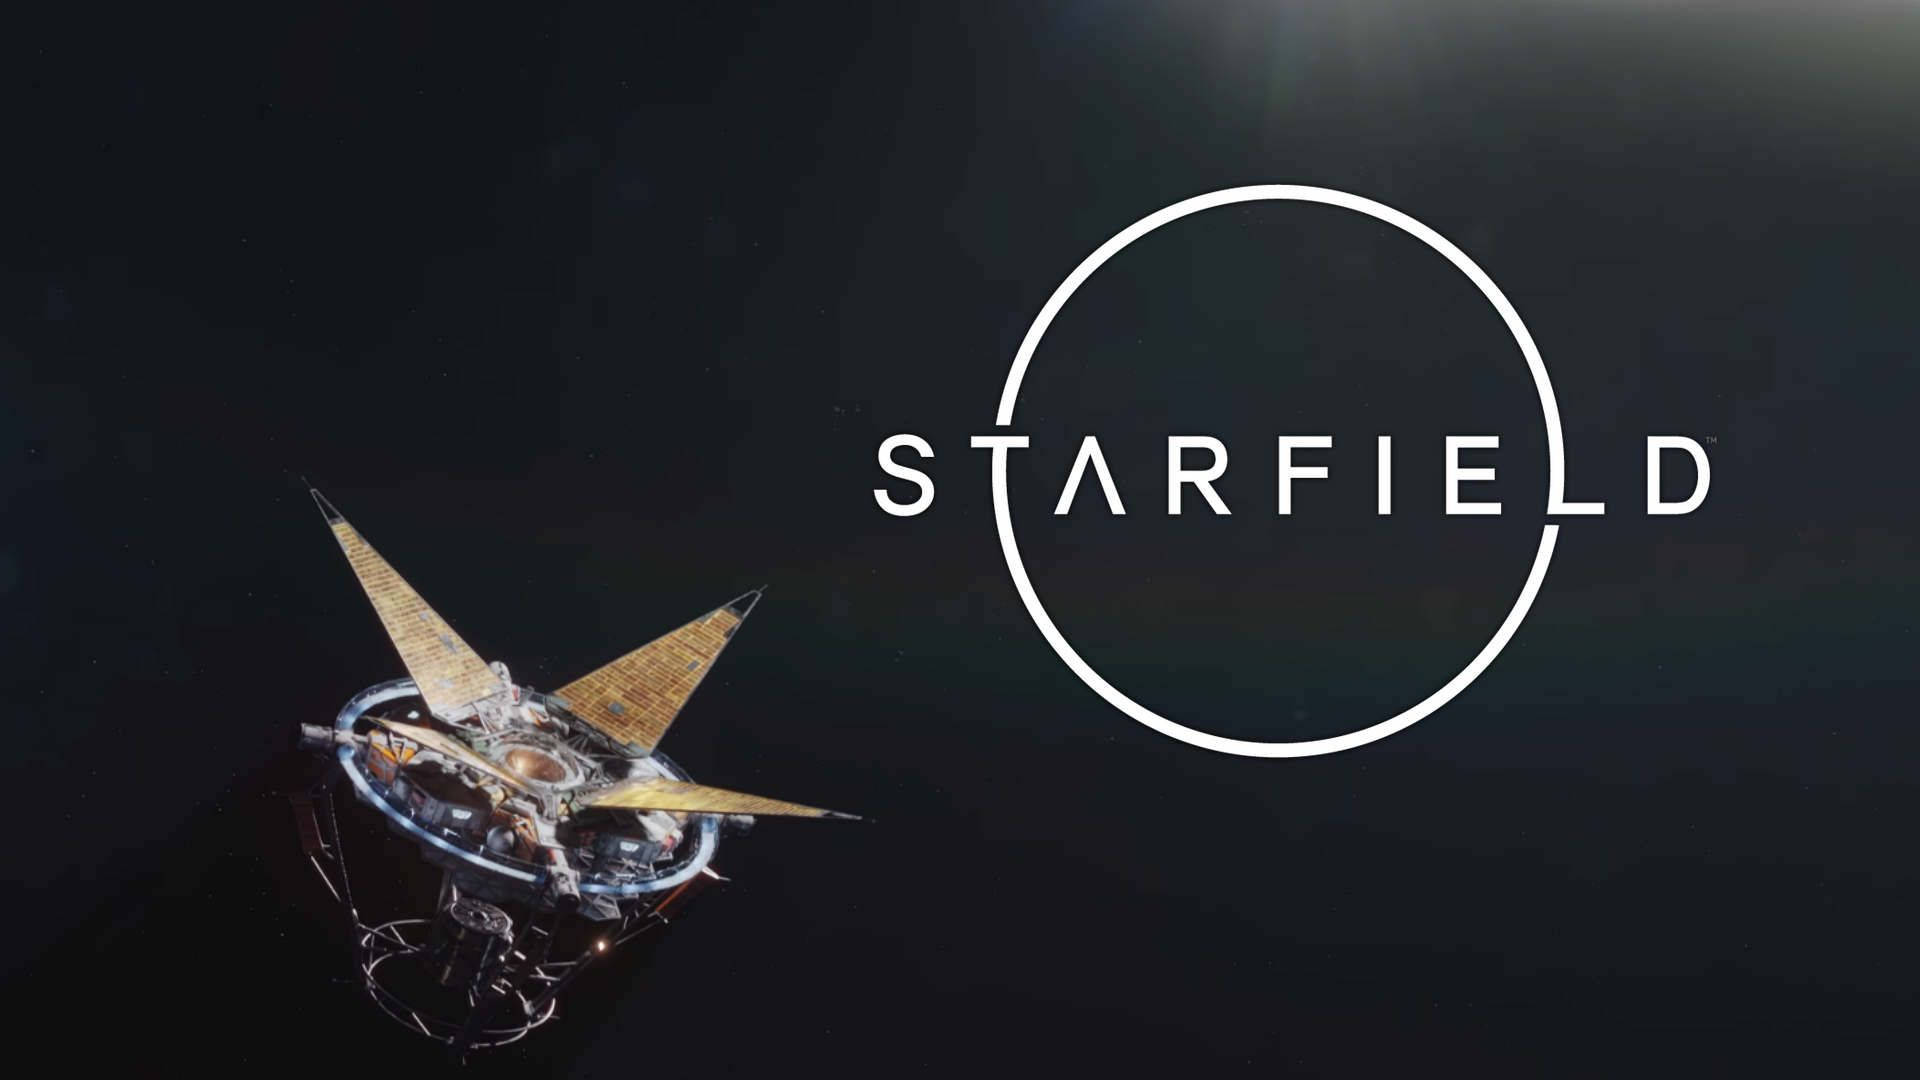 Starfield Beside The Satellite Background